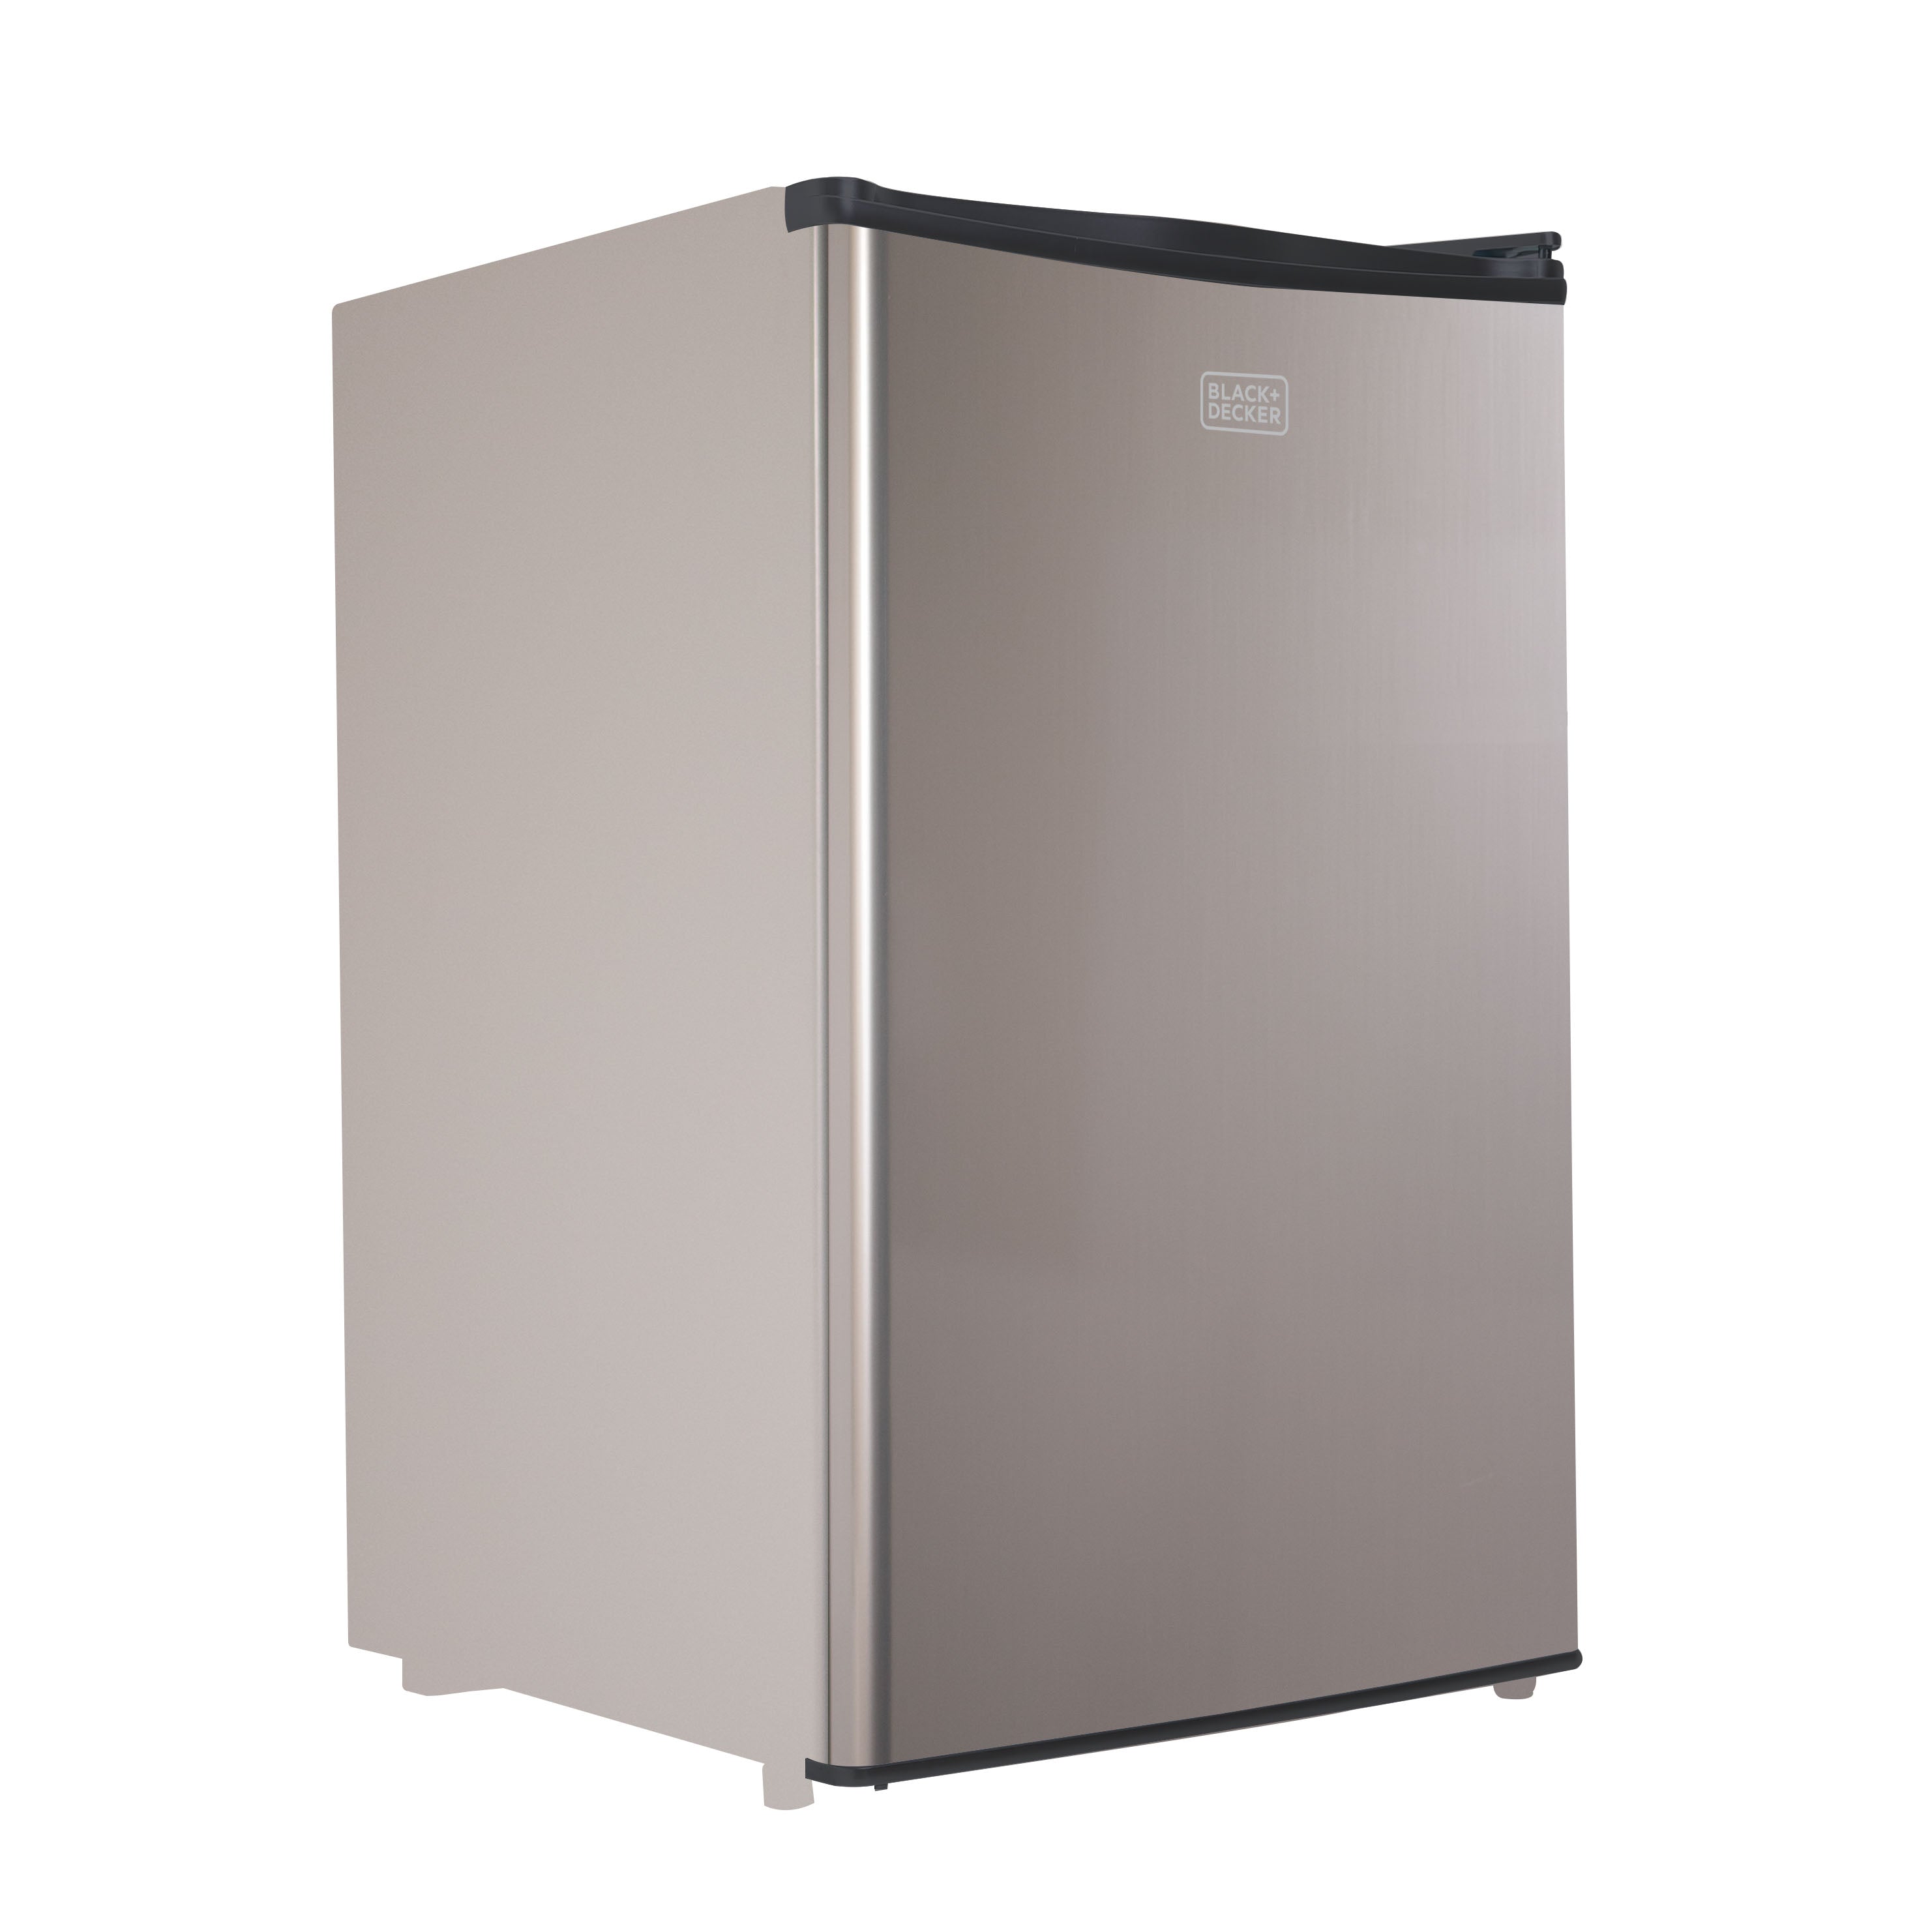 BLACK+DECKER Compact Refrigerator 4.3 Cu. Ft. with True Freezer, Silver